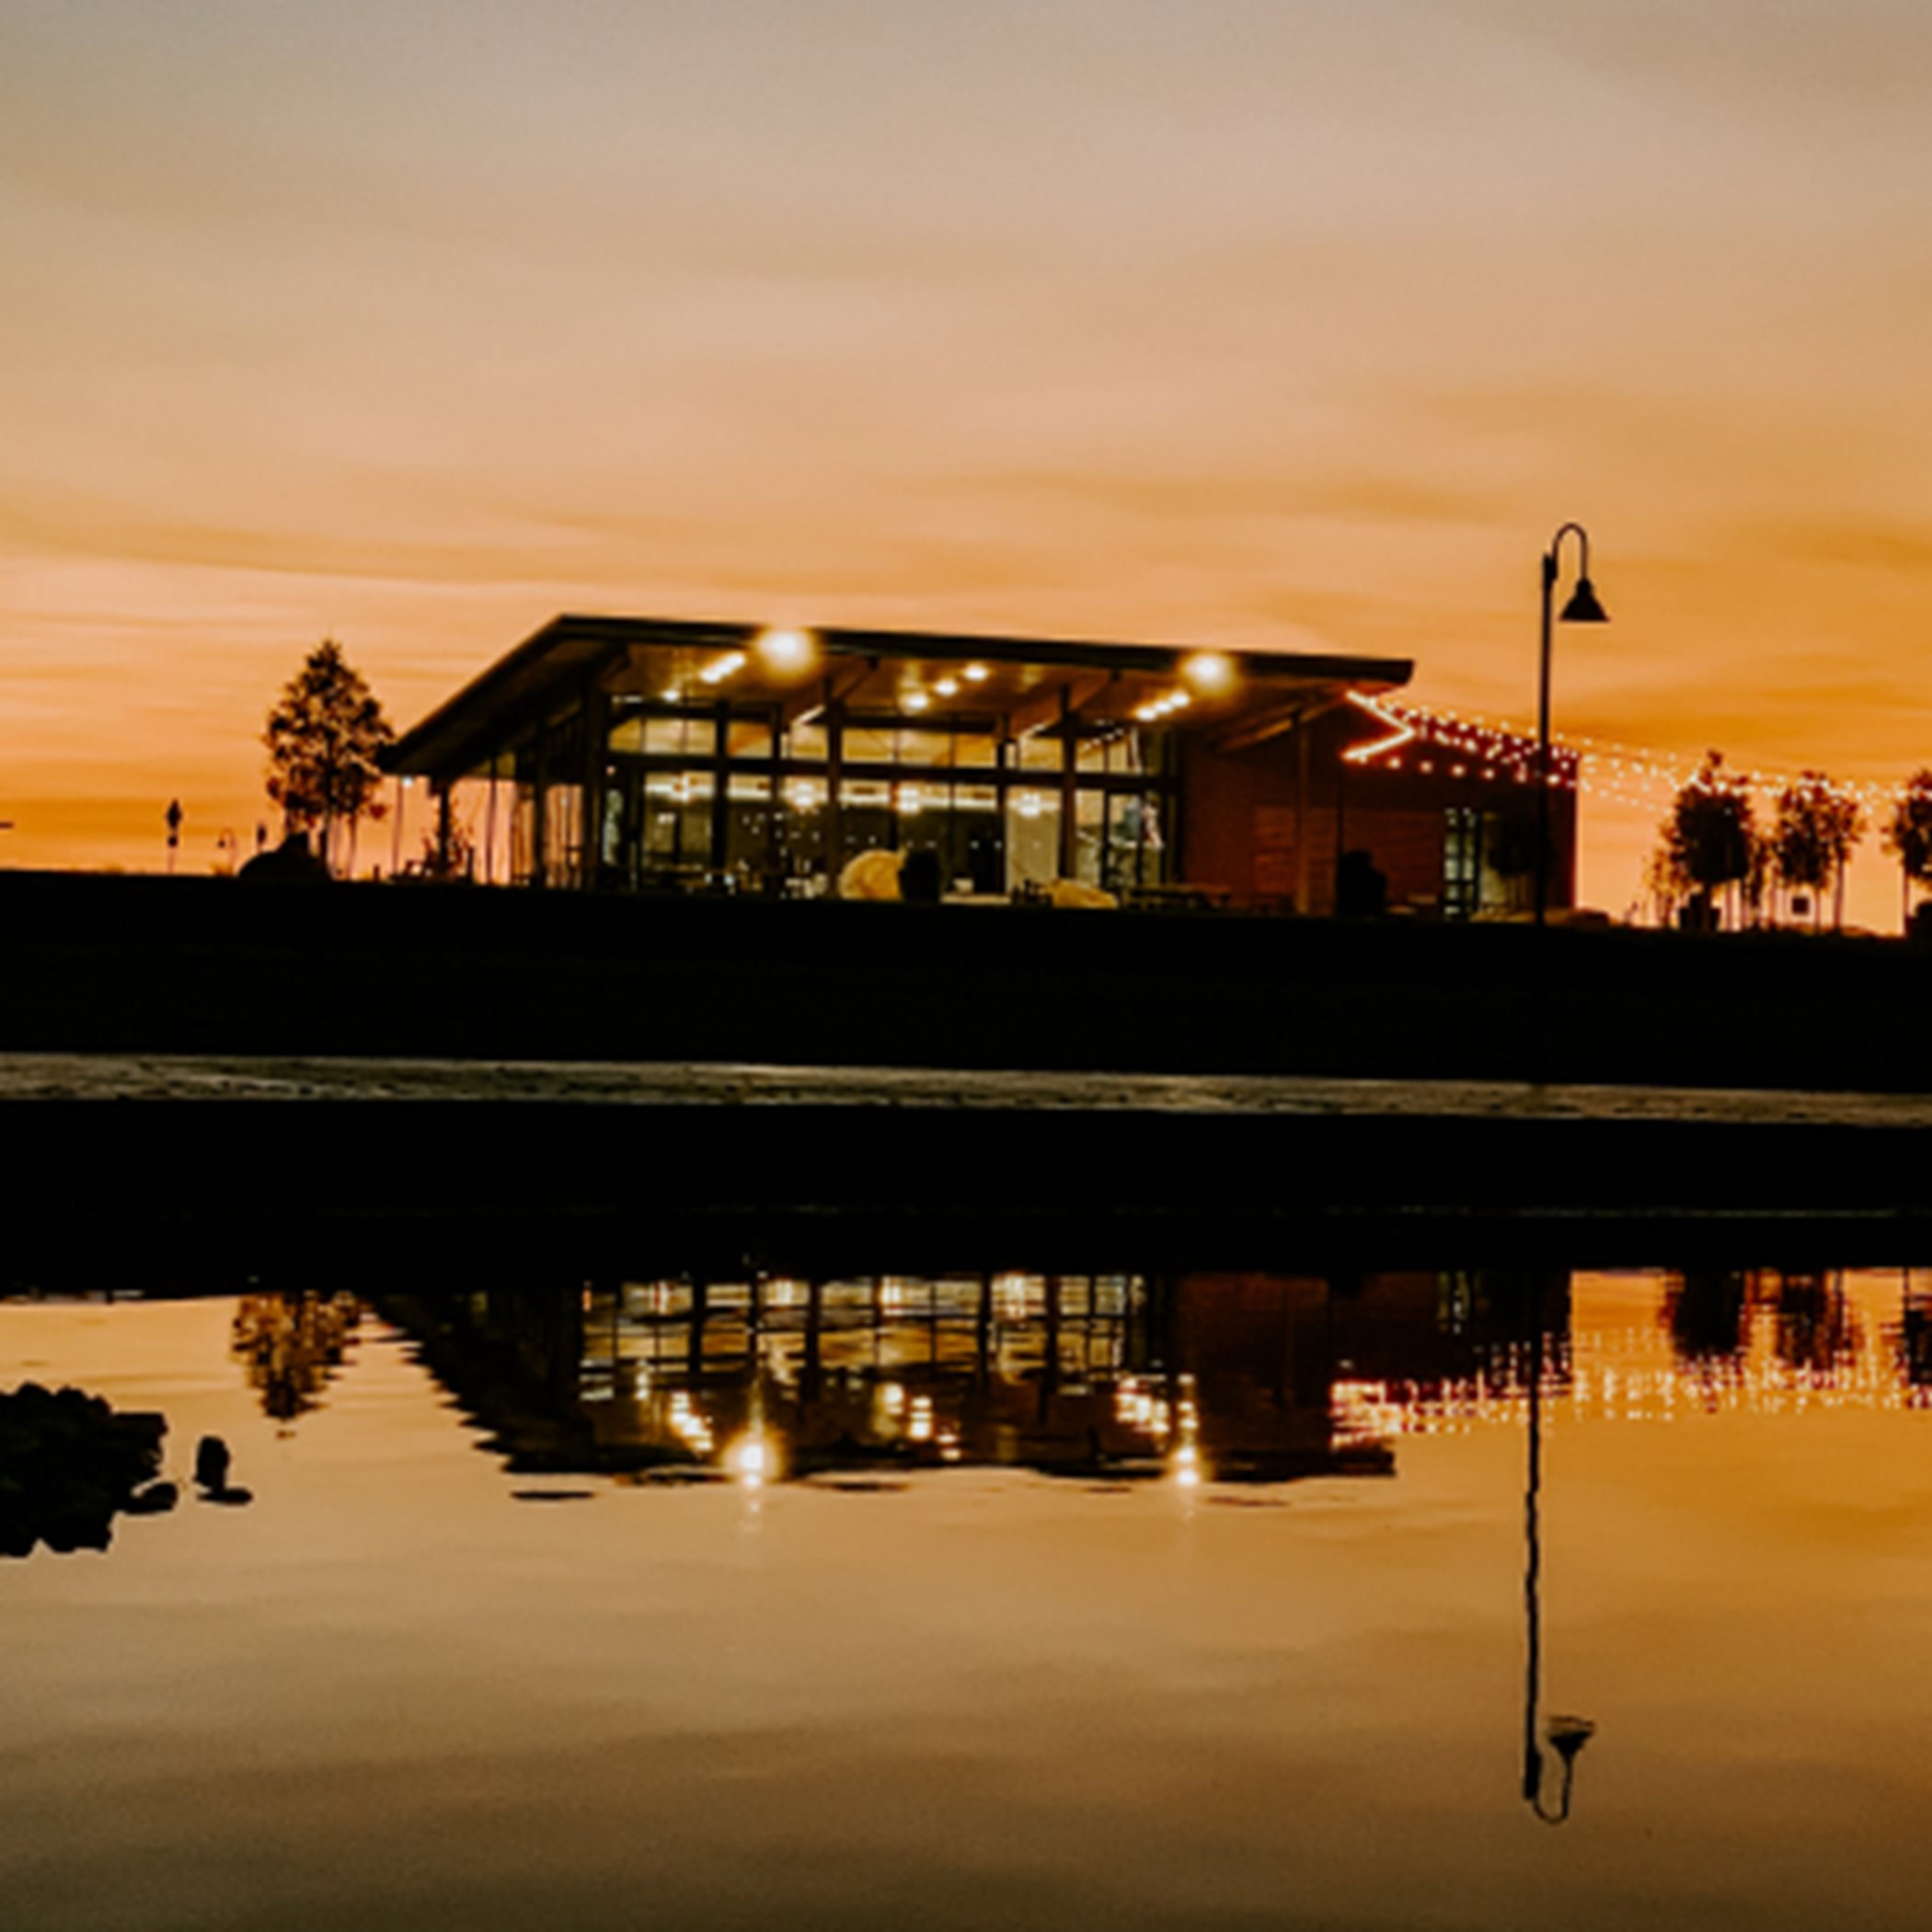 One Lake glass house at dusk